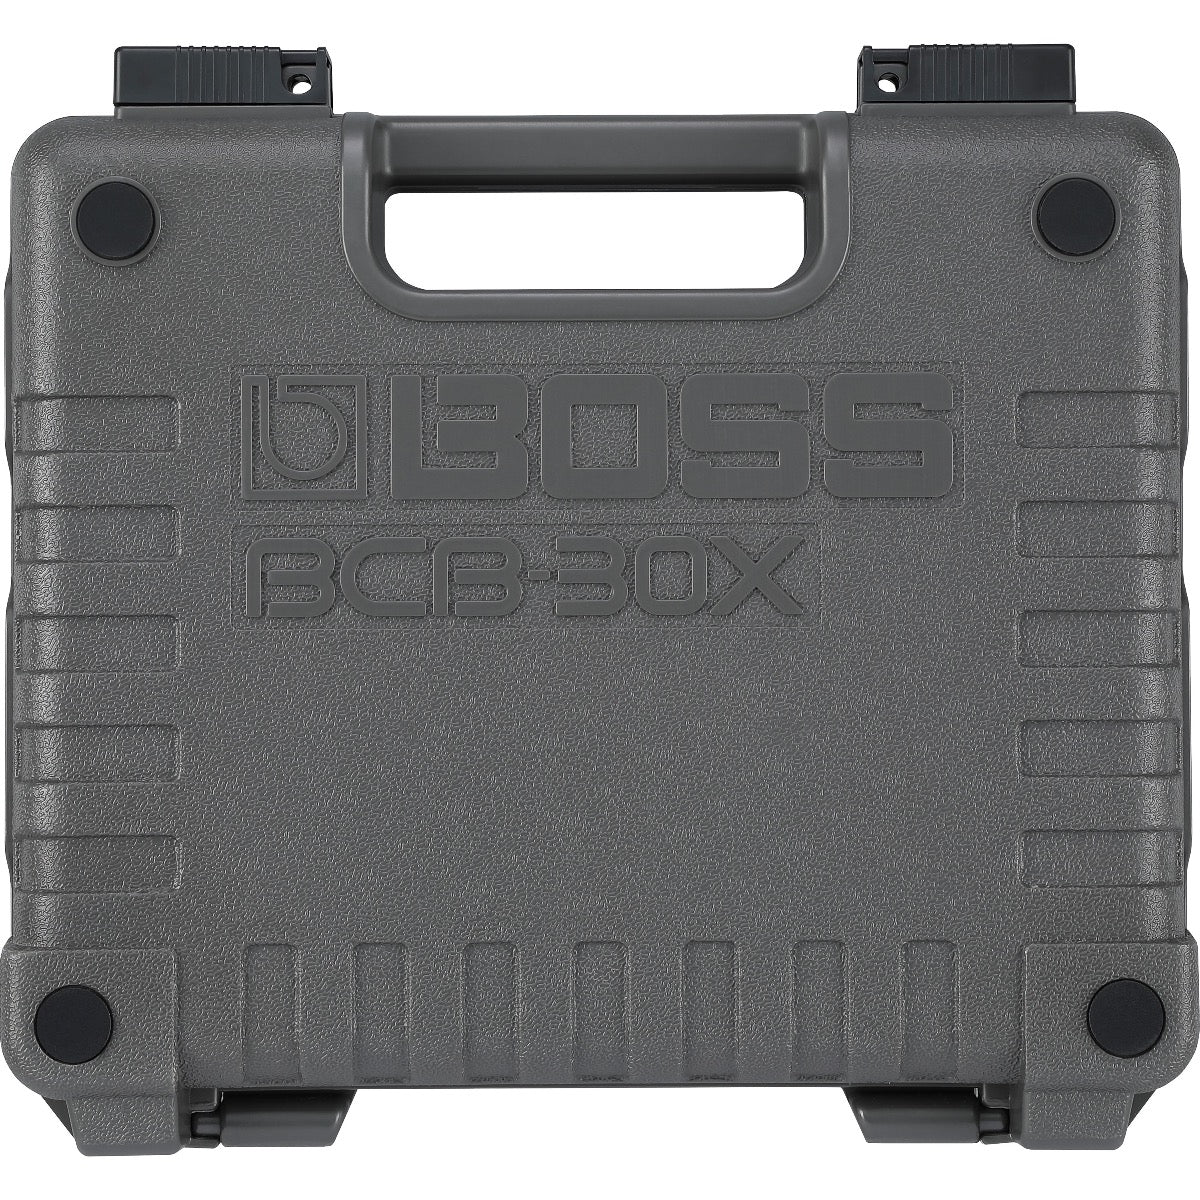 Bottom view of Boss BCB-30X Guitar Effects Pedalboard